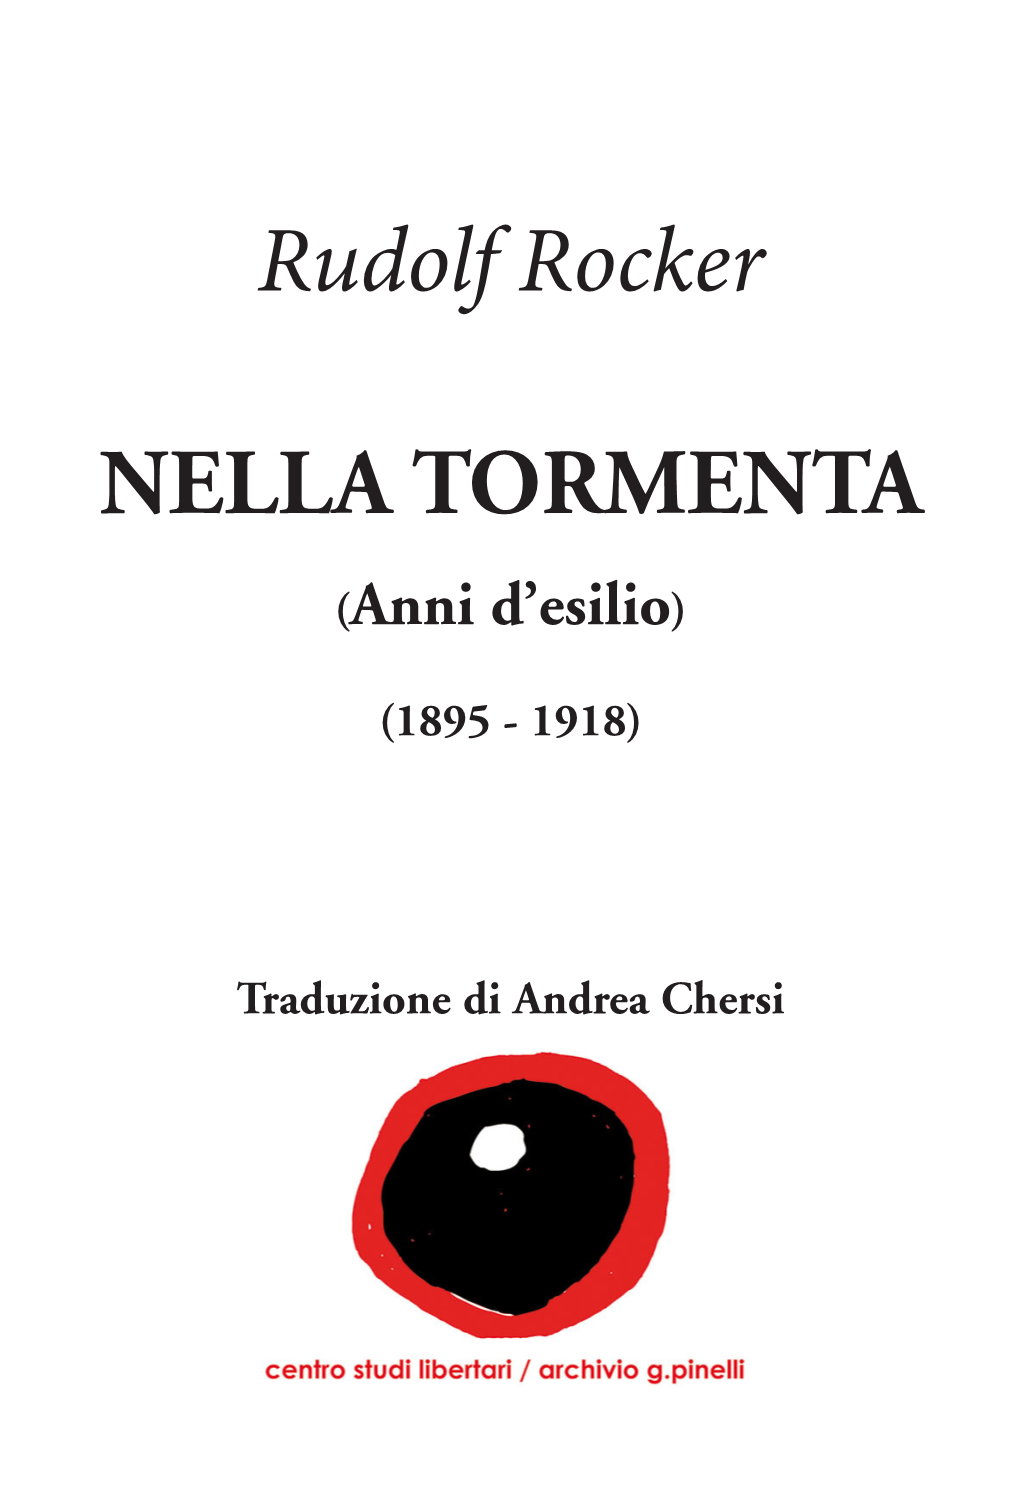 Rudolf Rocker NELLA TORMENTA